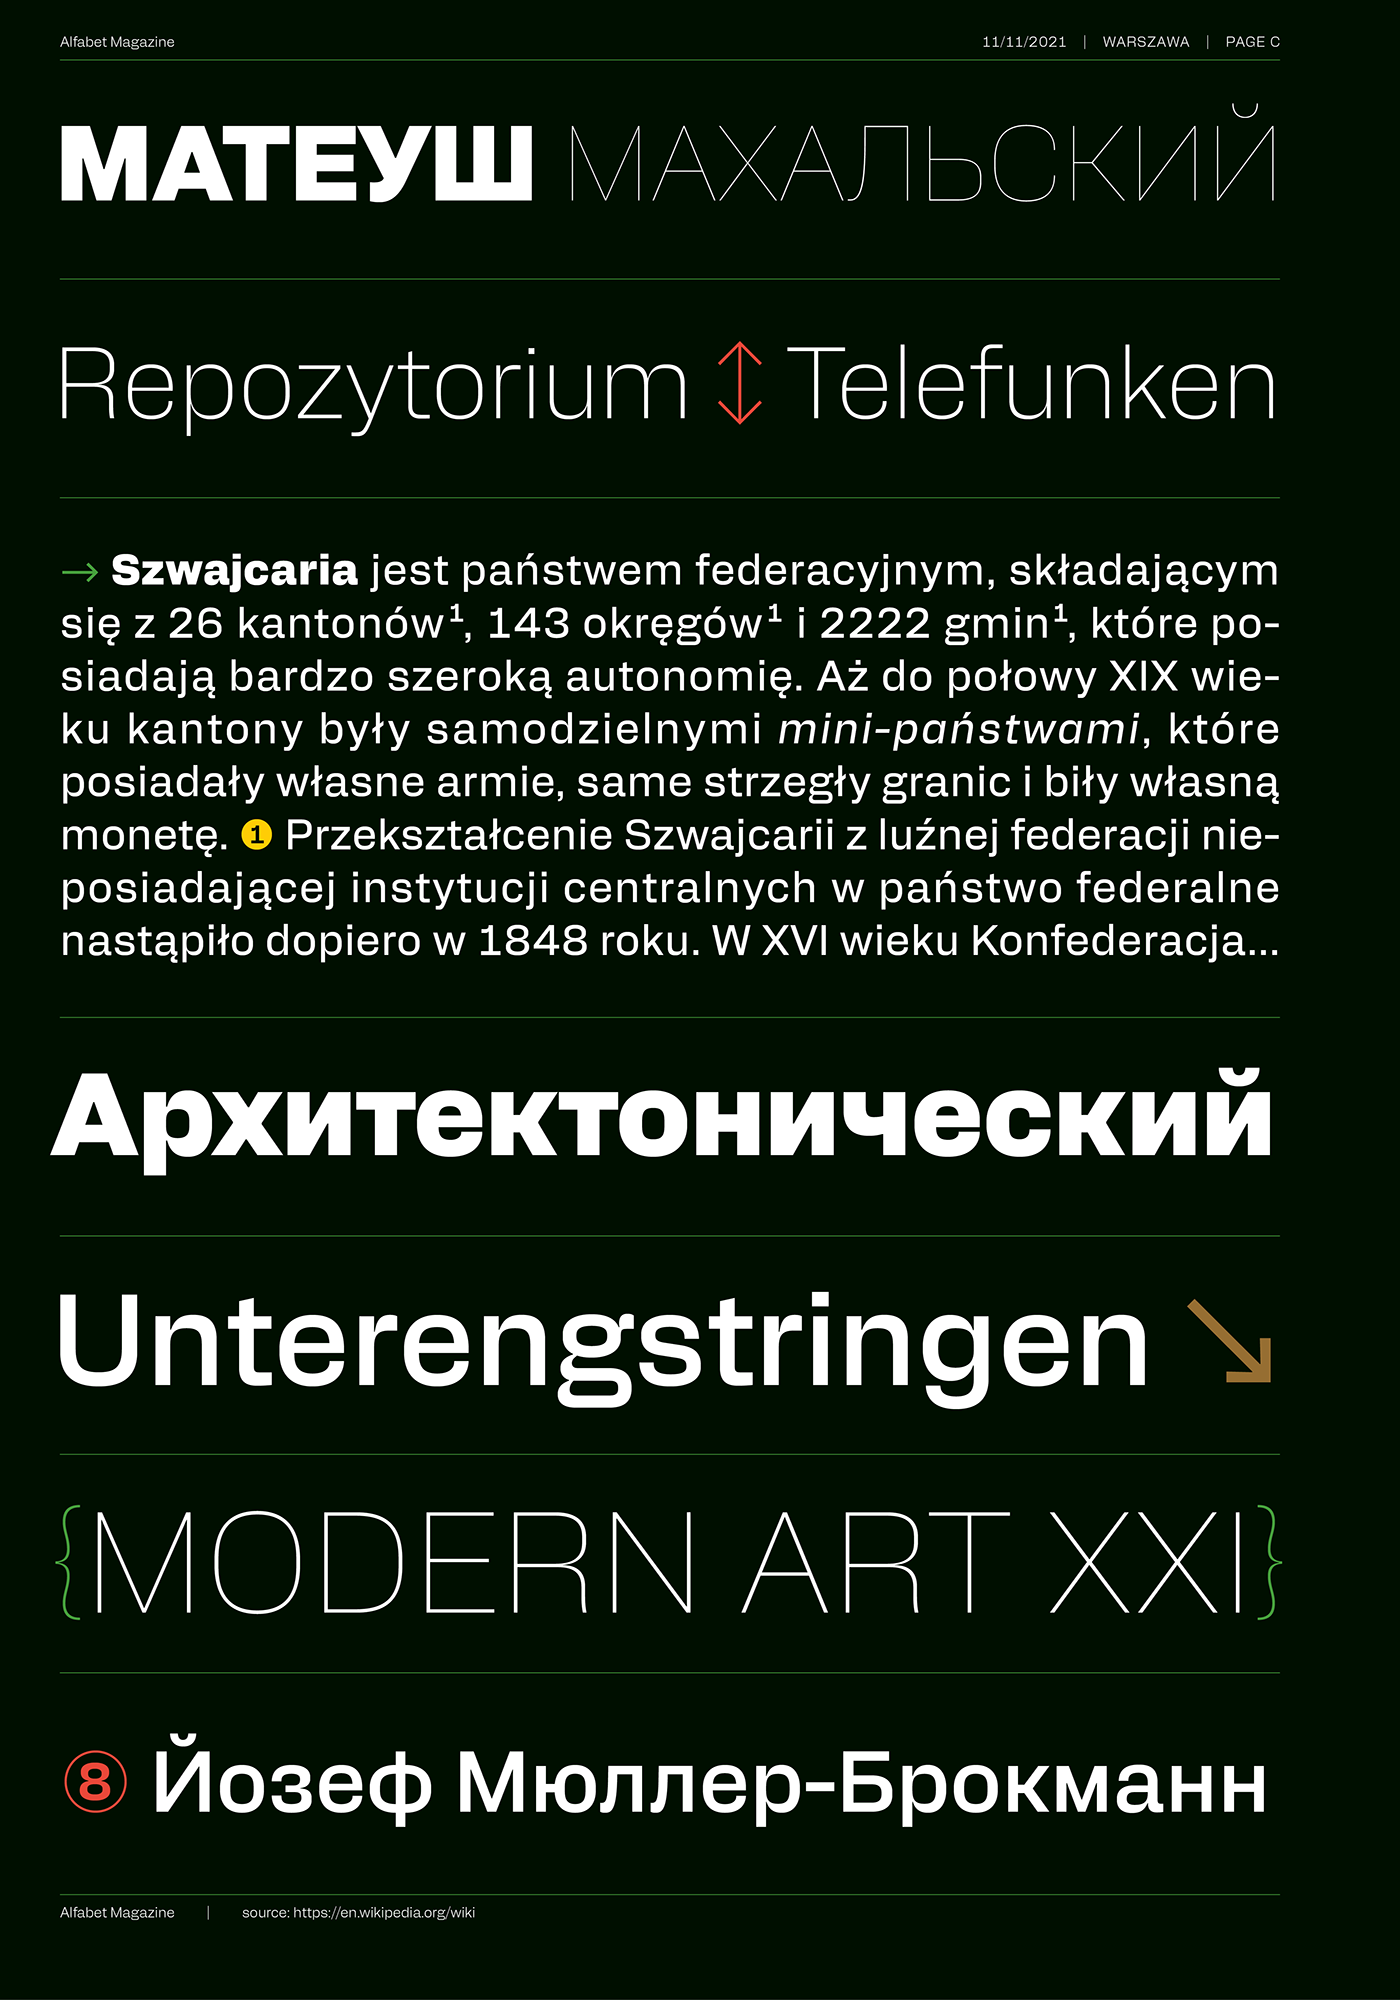 Alfabet Branding Typeface logo font MACHALSKI Mateusz Machalski  modularity swiss design Type Specimen typeface design typography design